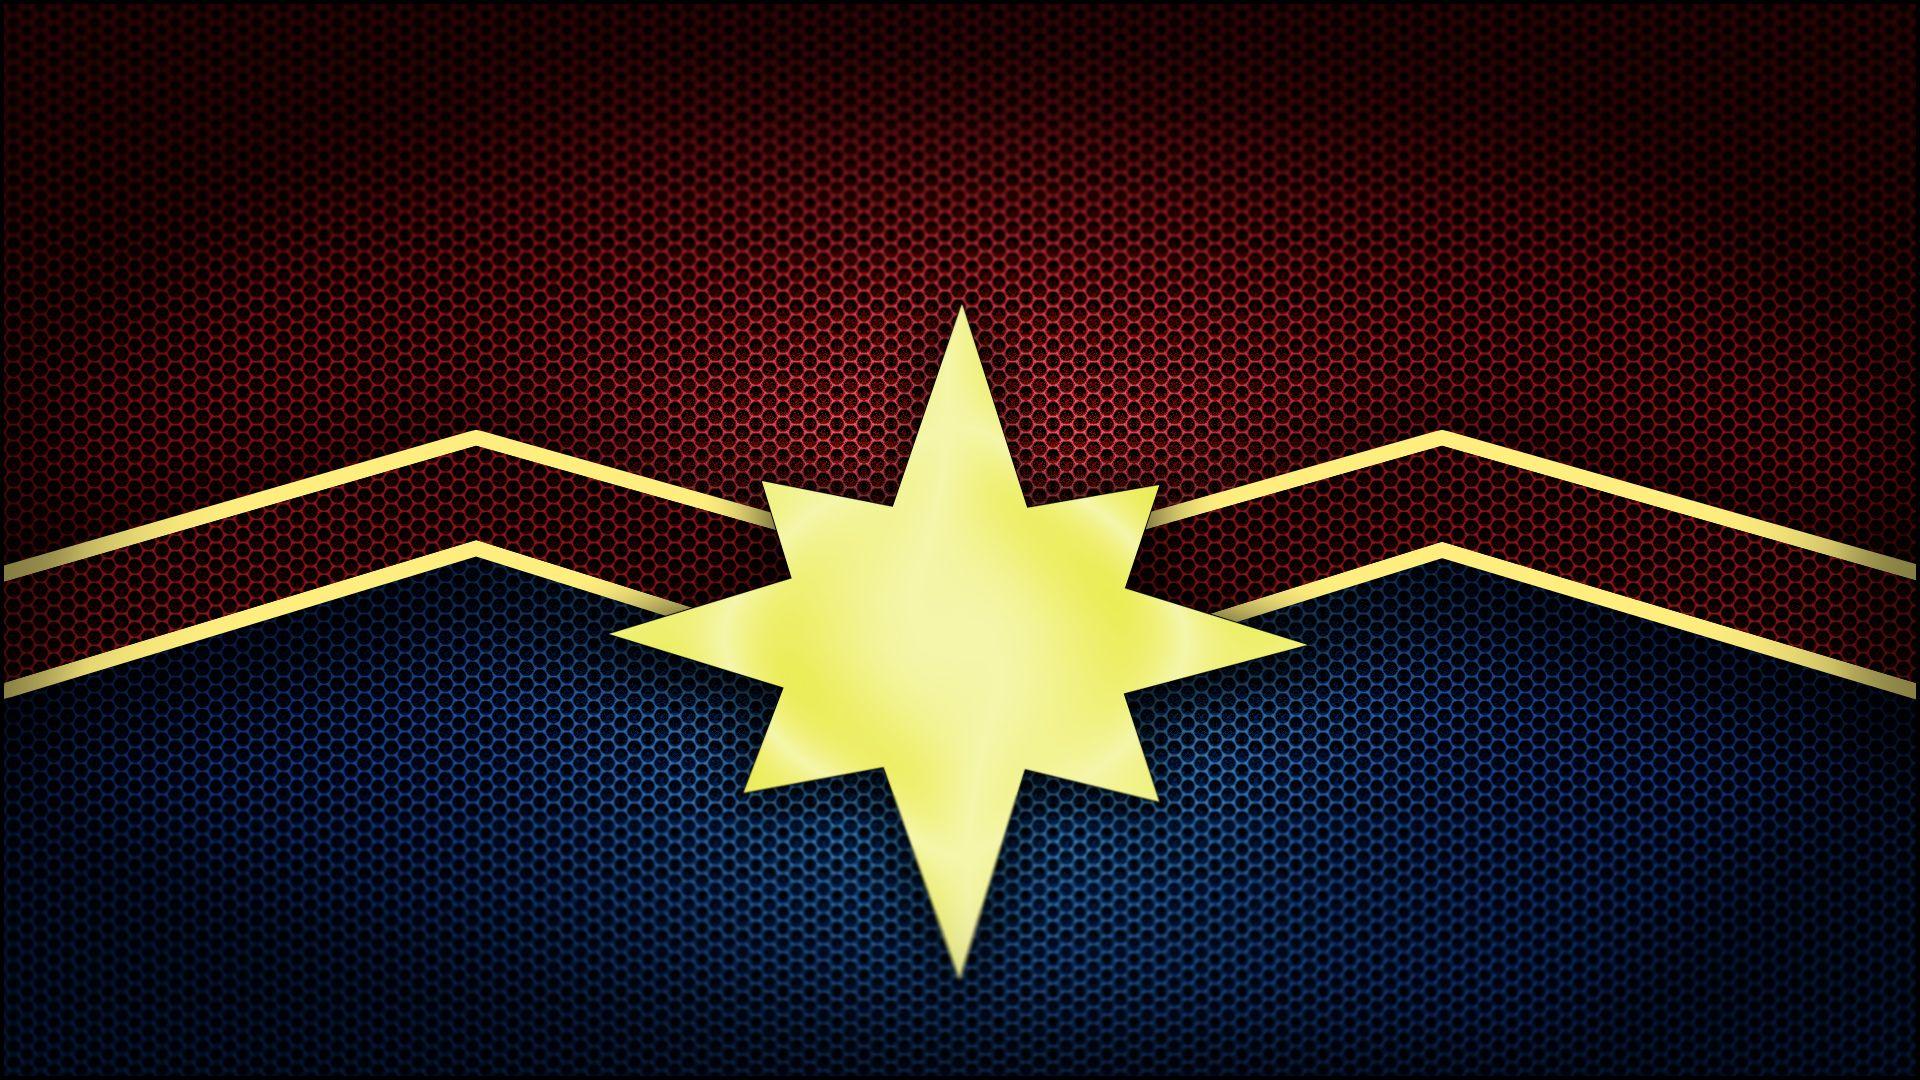 Captain Marvel Wallpaper & Background Image